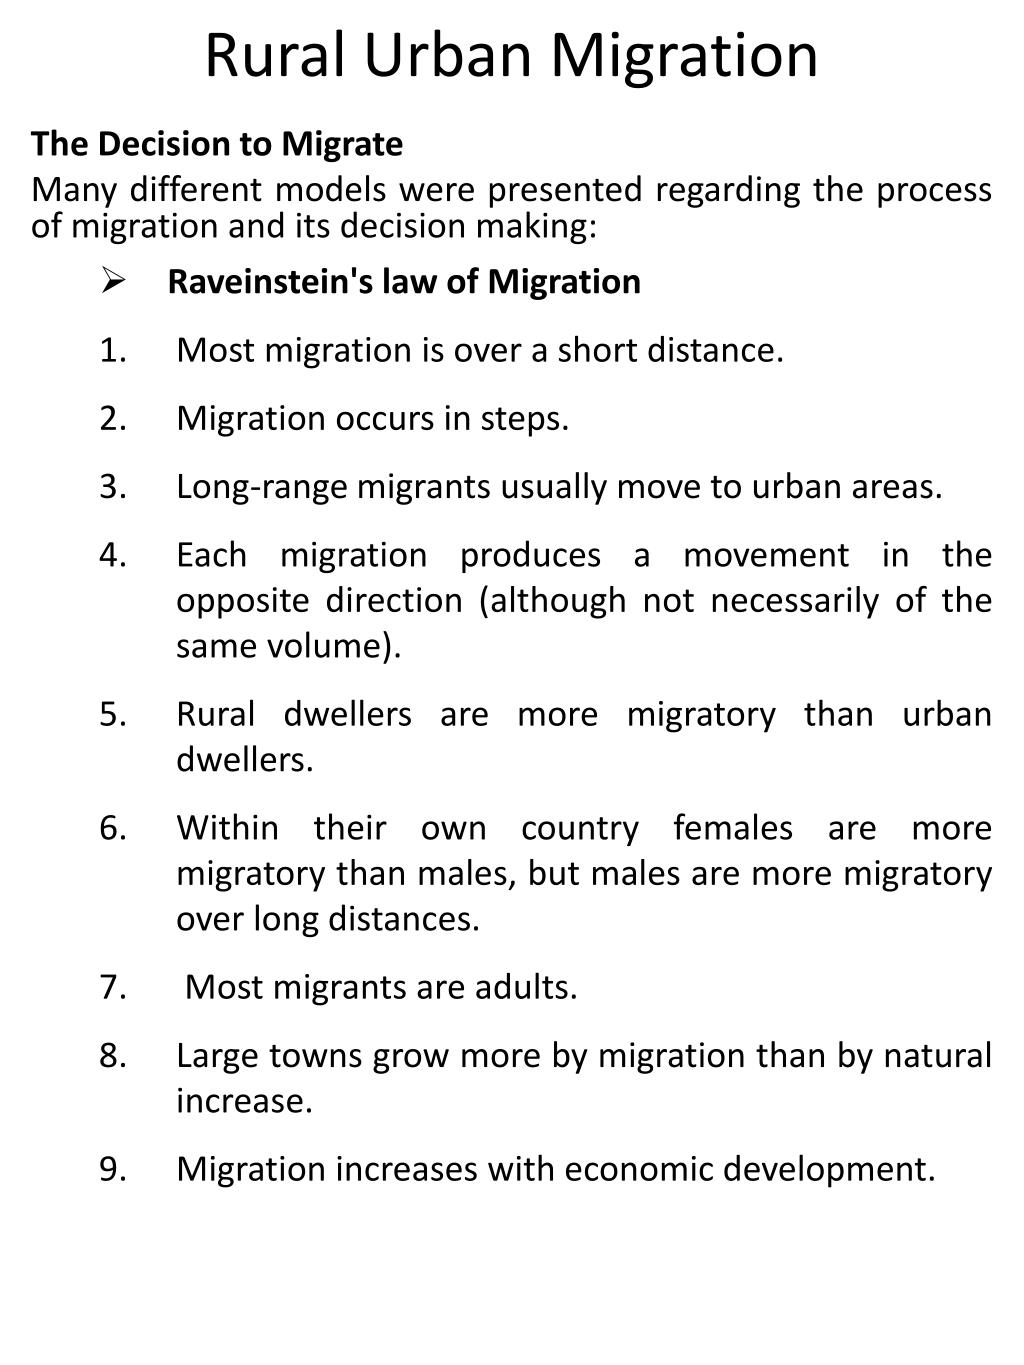 essay attitude towards migrants in your local area